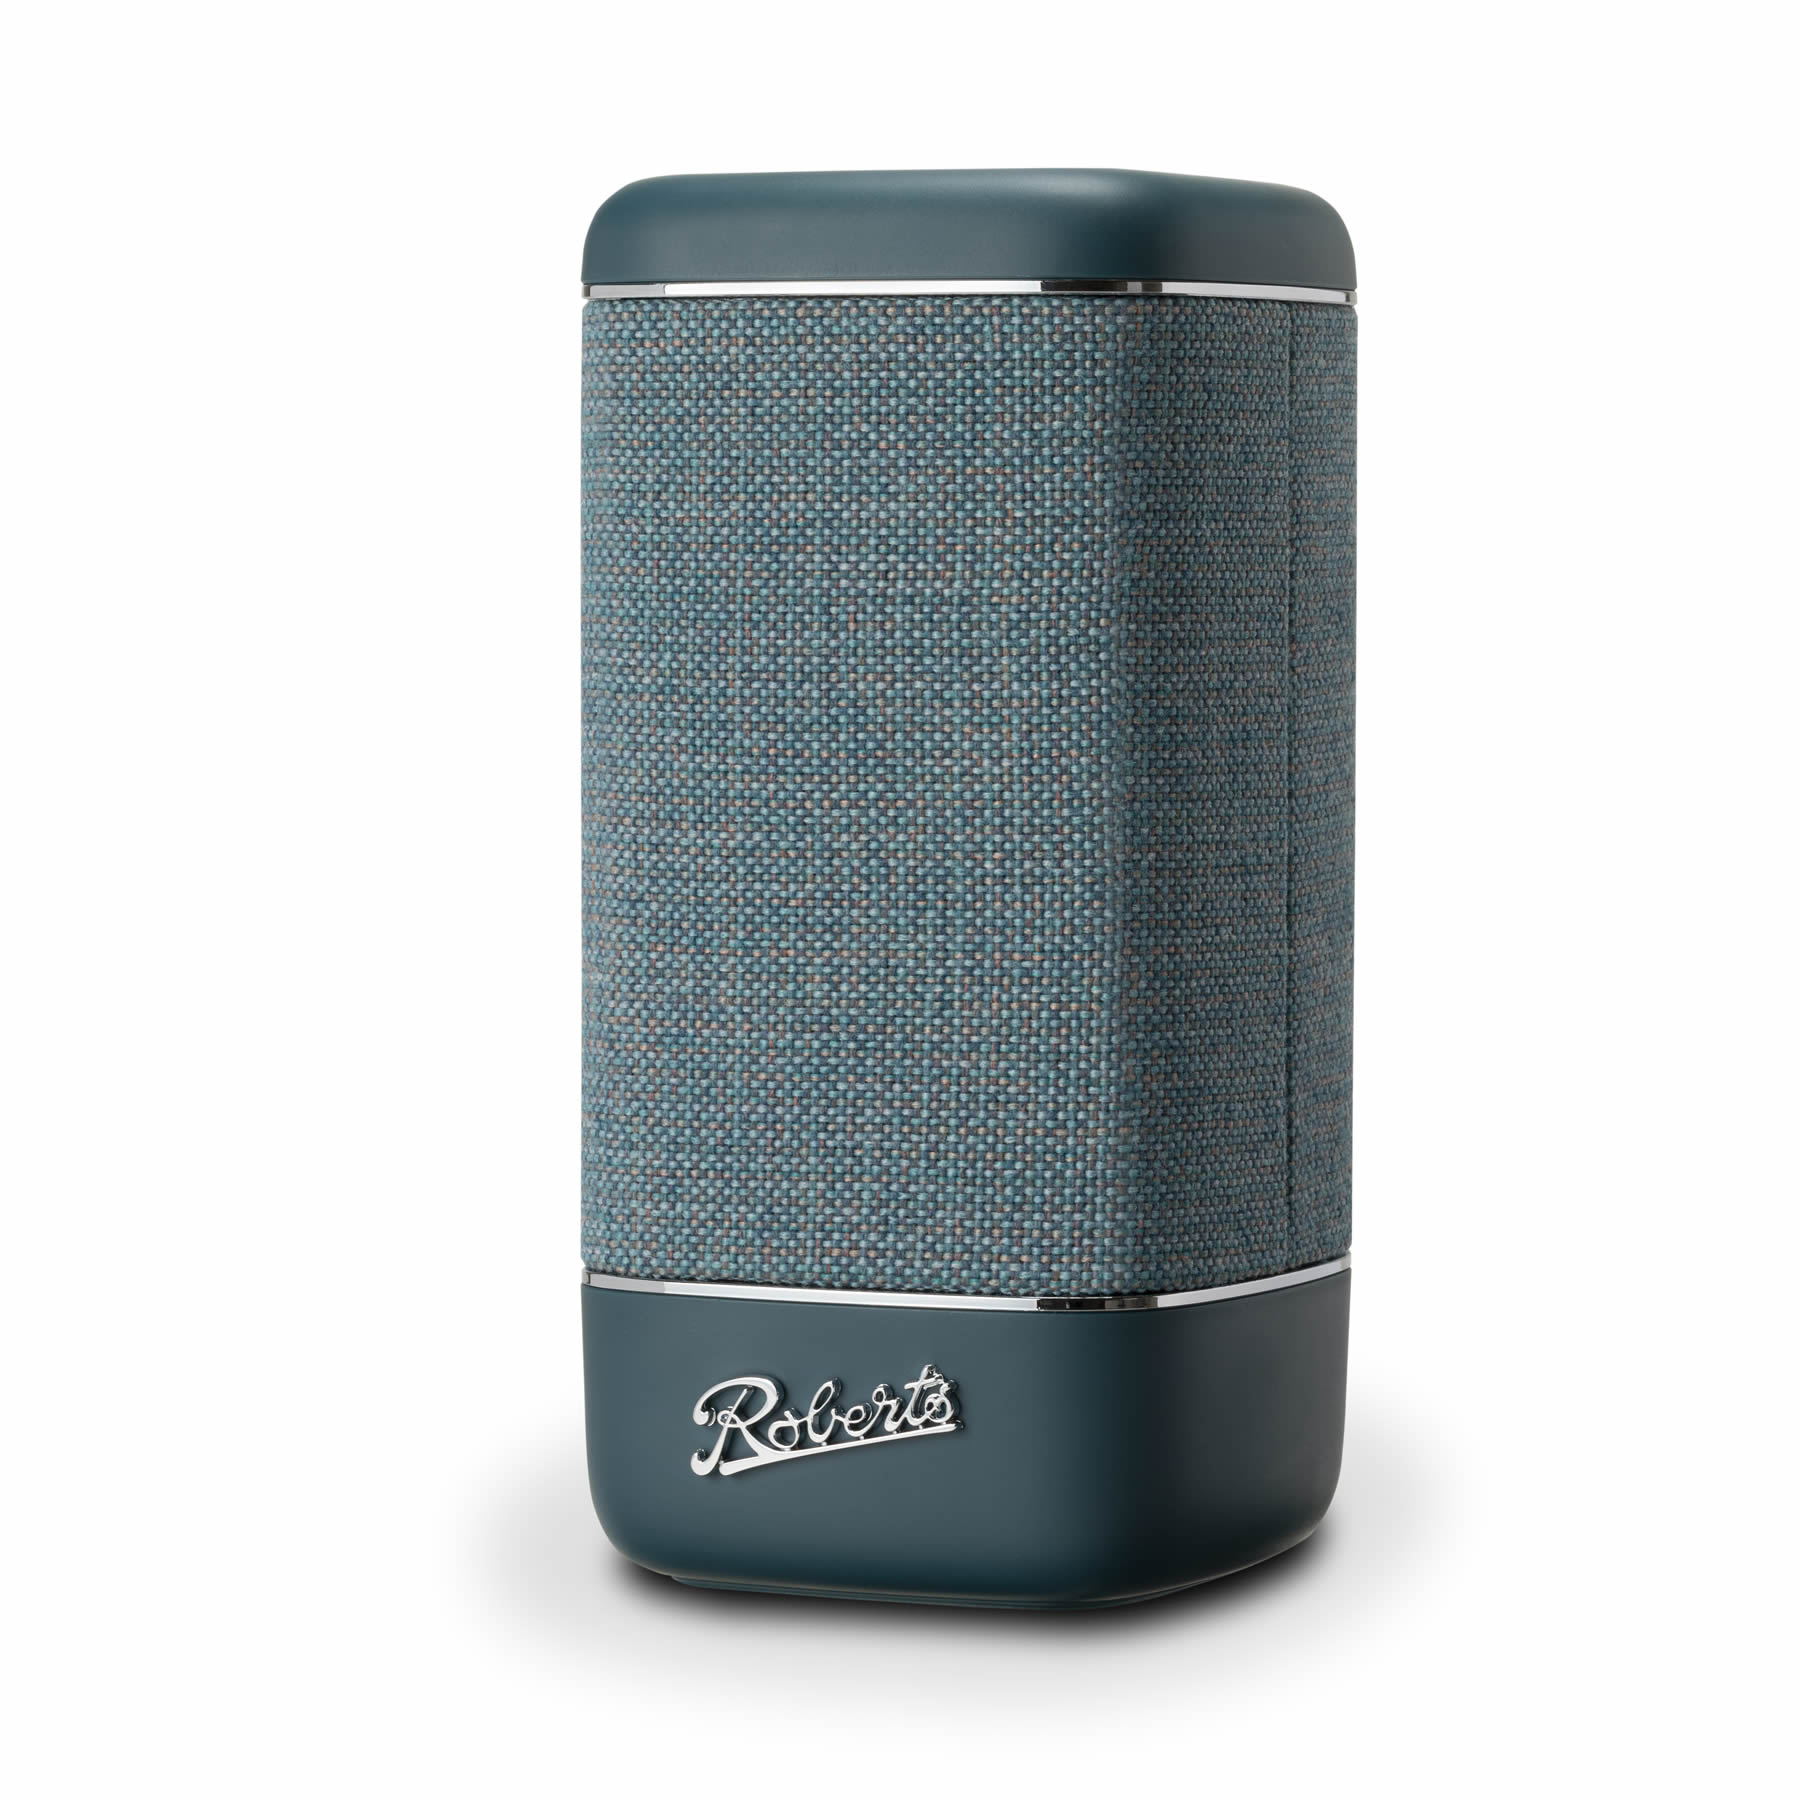 Roberts Bluetooth Speaker 12-hour Playback Teal Blue